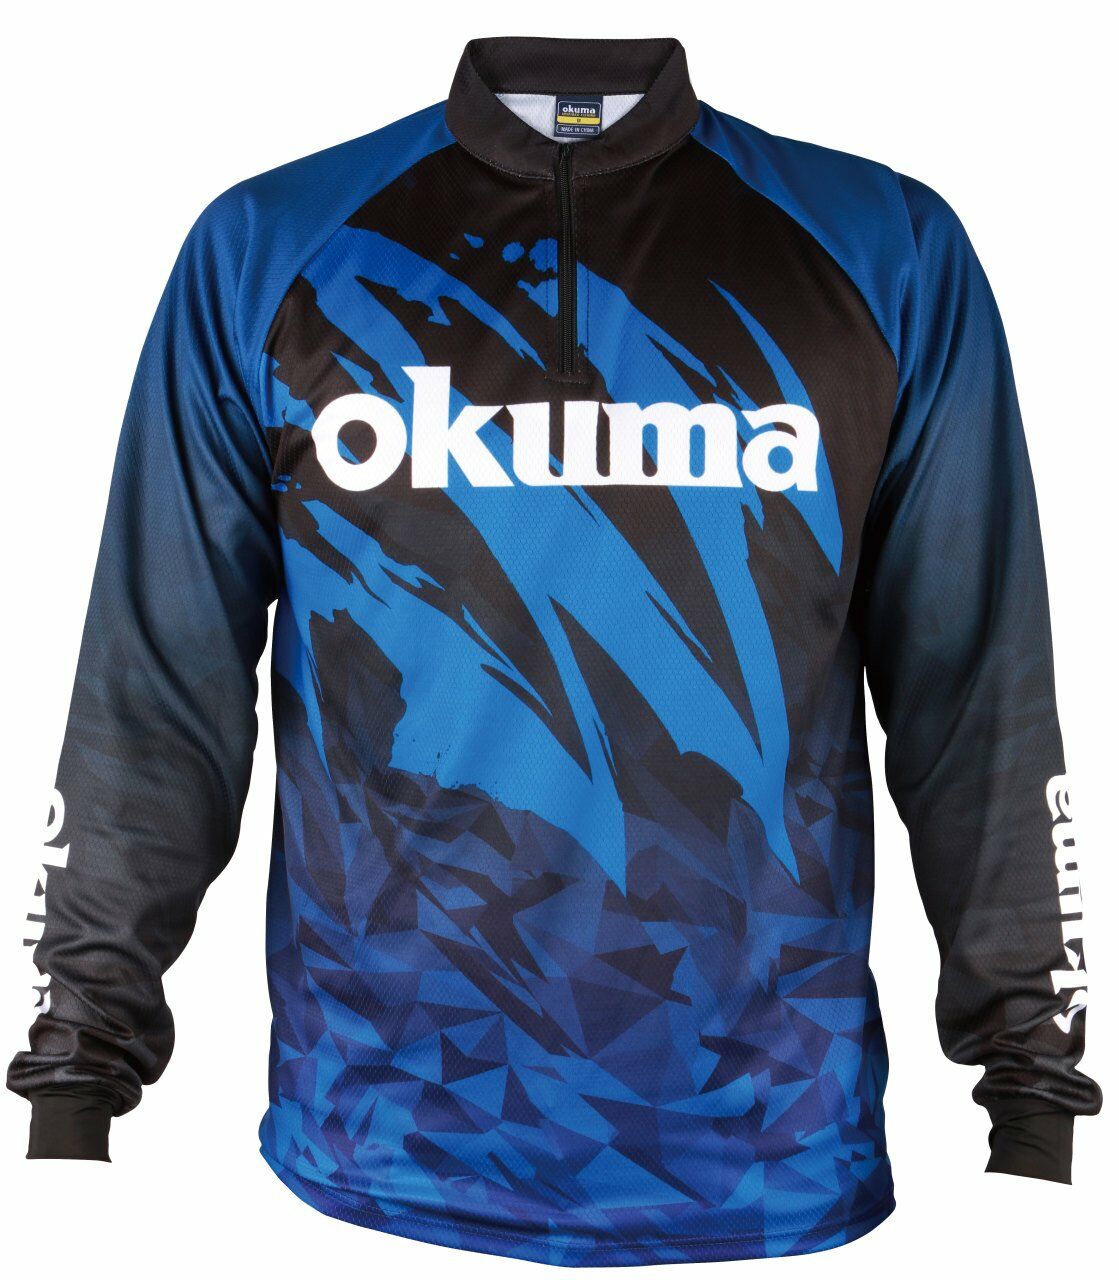 Okuma Motif Tournament jersey XL